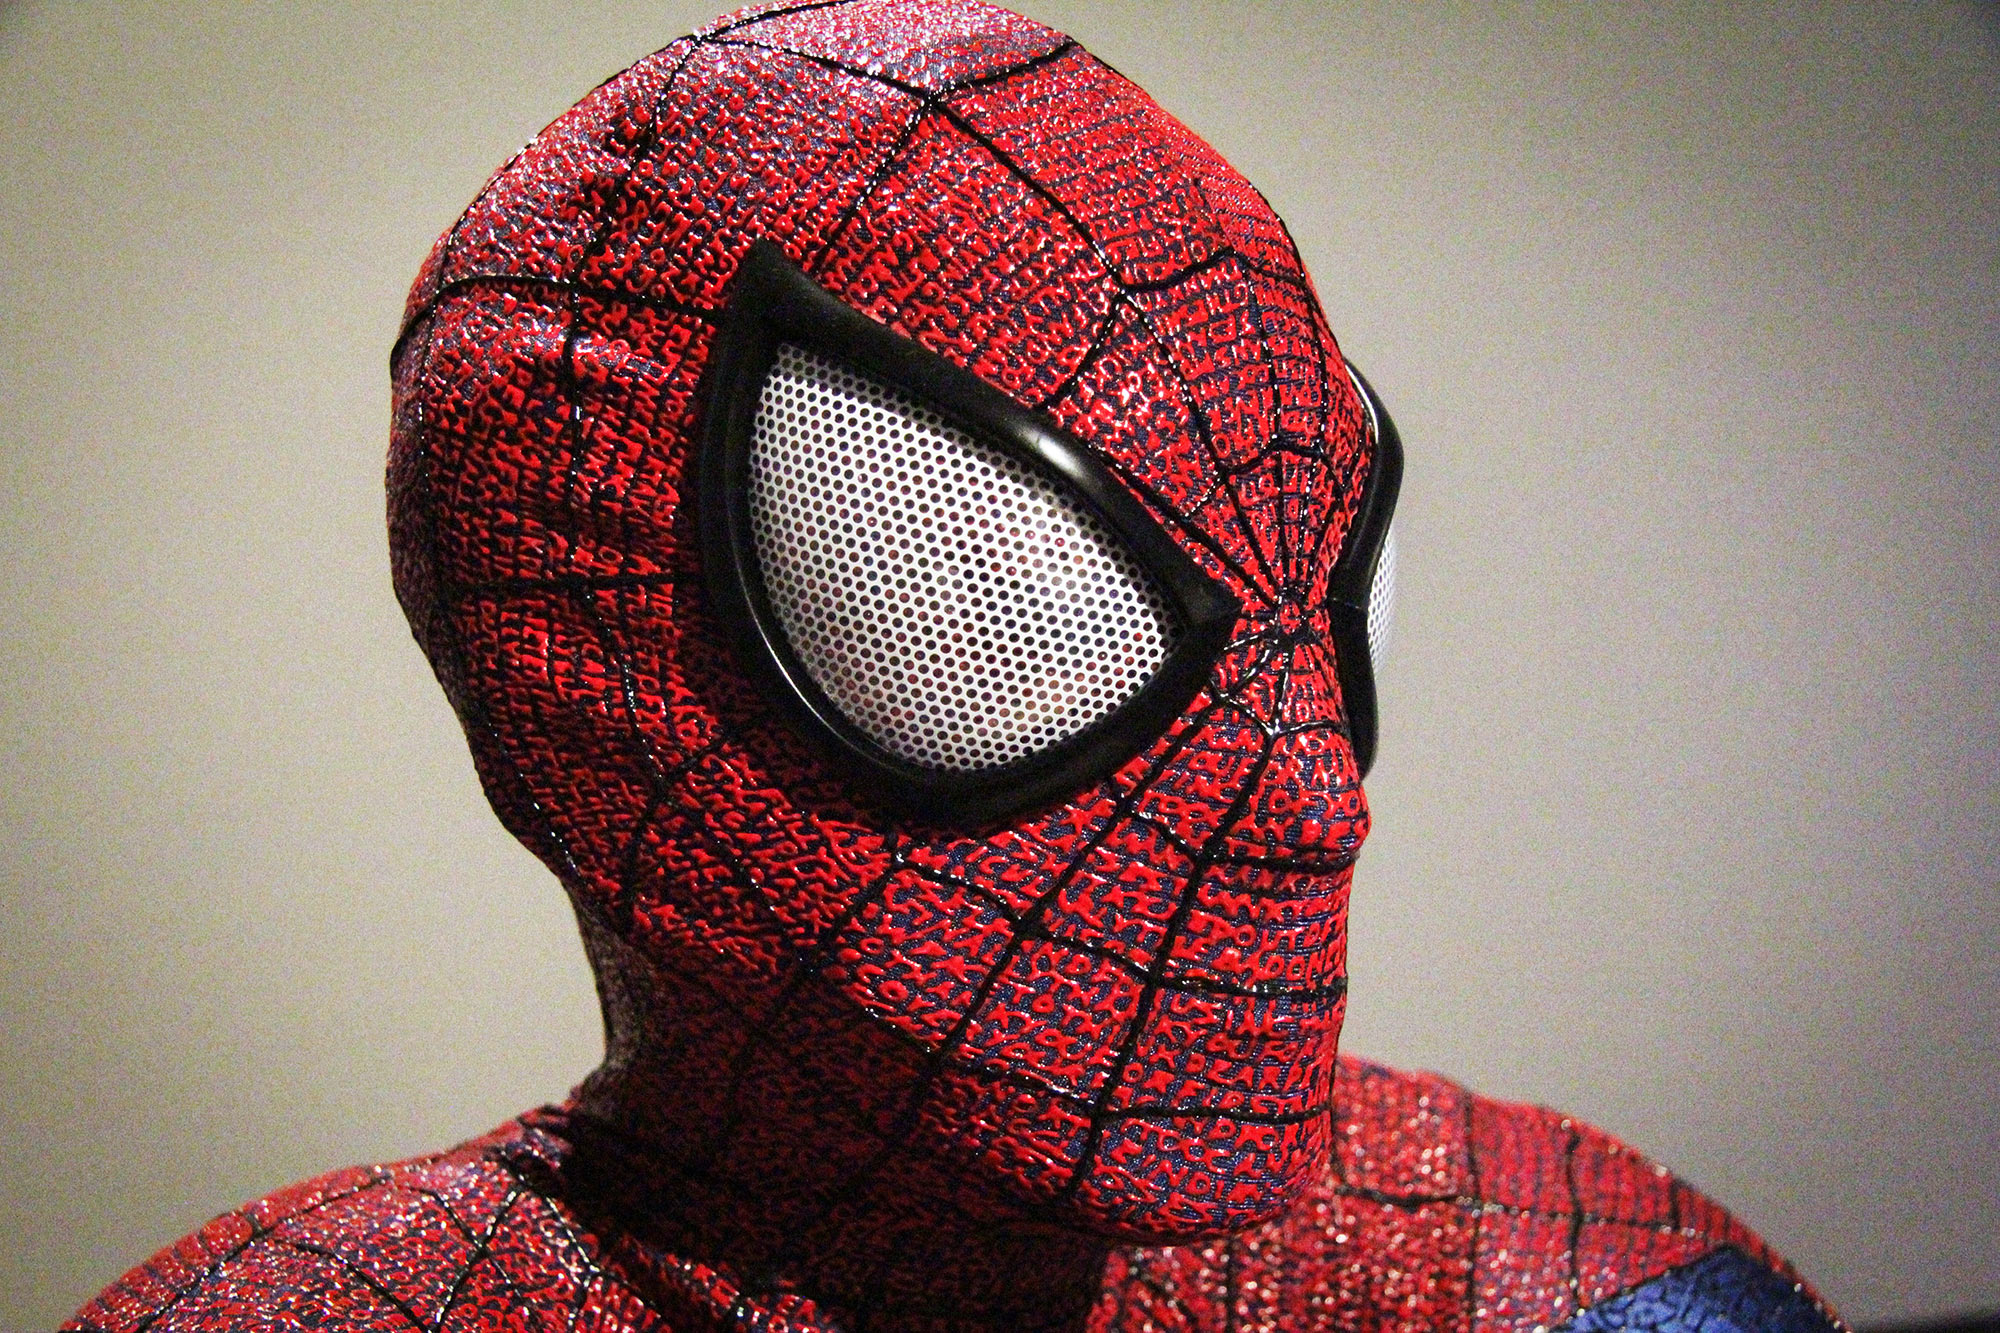 ENTERTAINMENTSTORE Spiderman Sitting Pose - Spiderman Sitting Pose . Buy  Spider-Man toys in India. shop for ENTERTAINMENTSTORE products in India. |  Flipkart.com